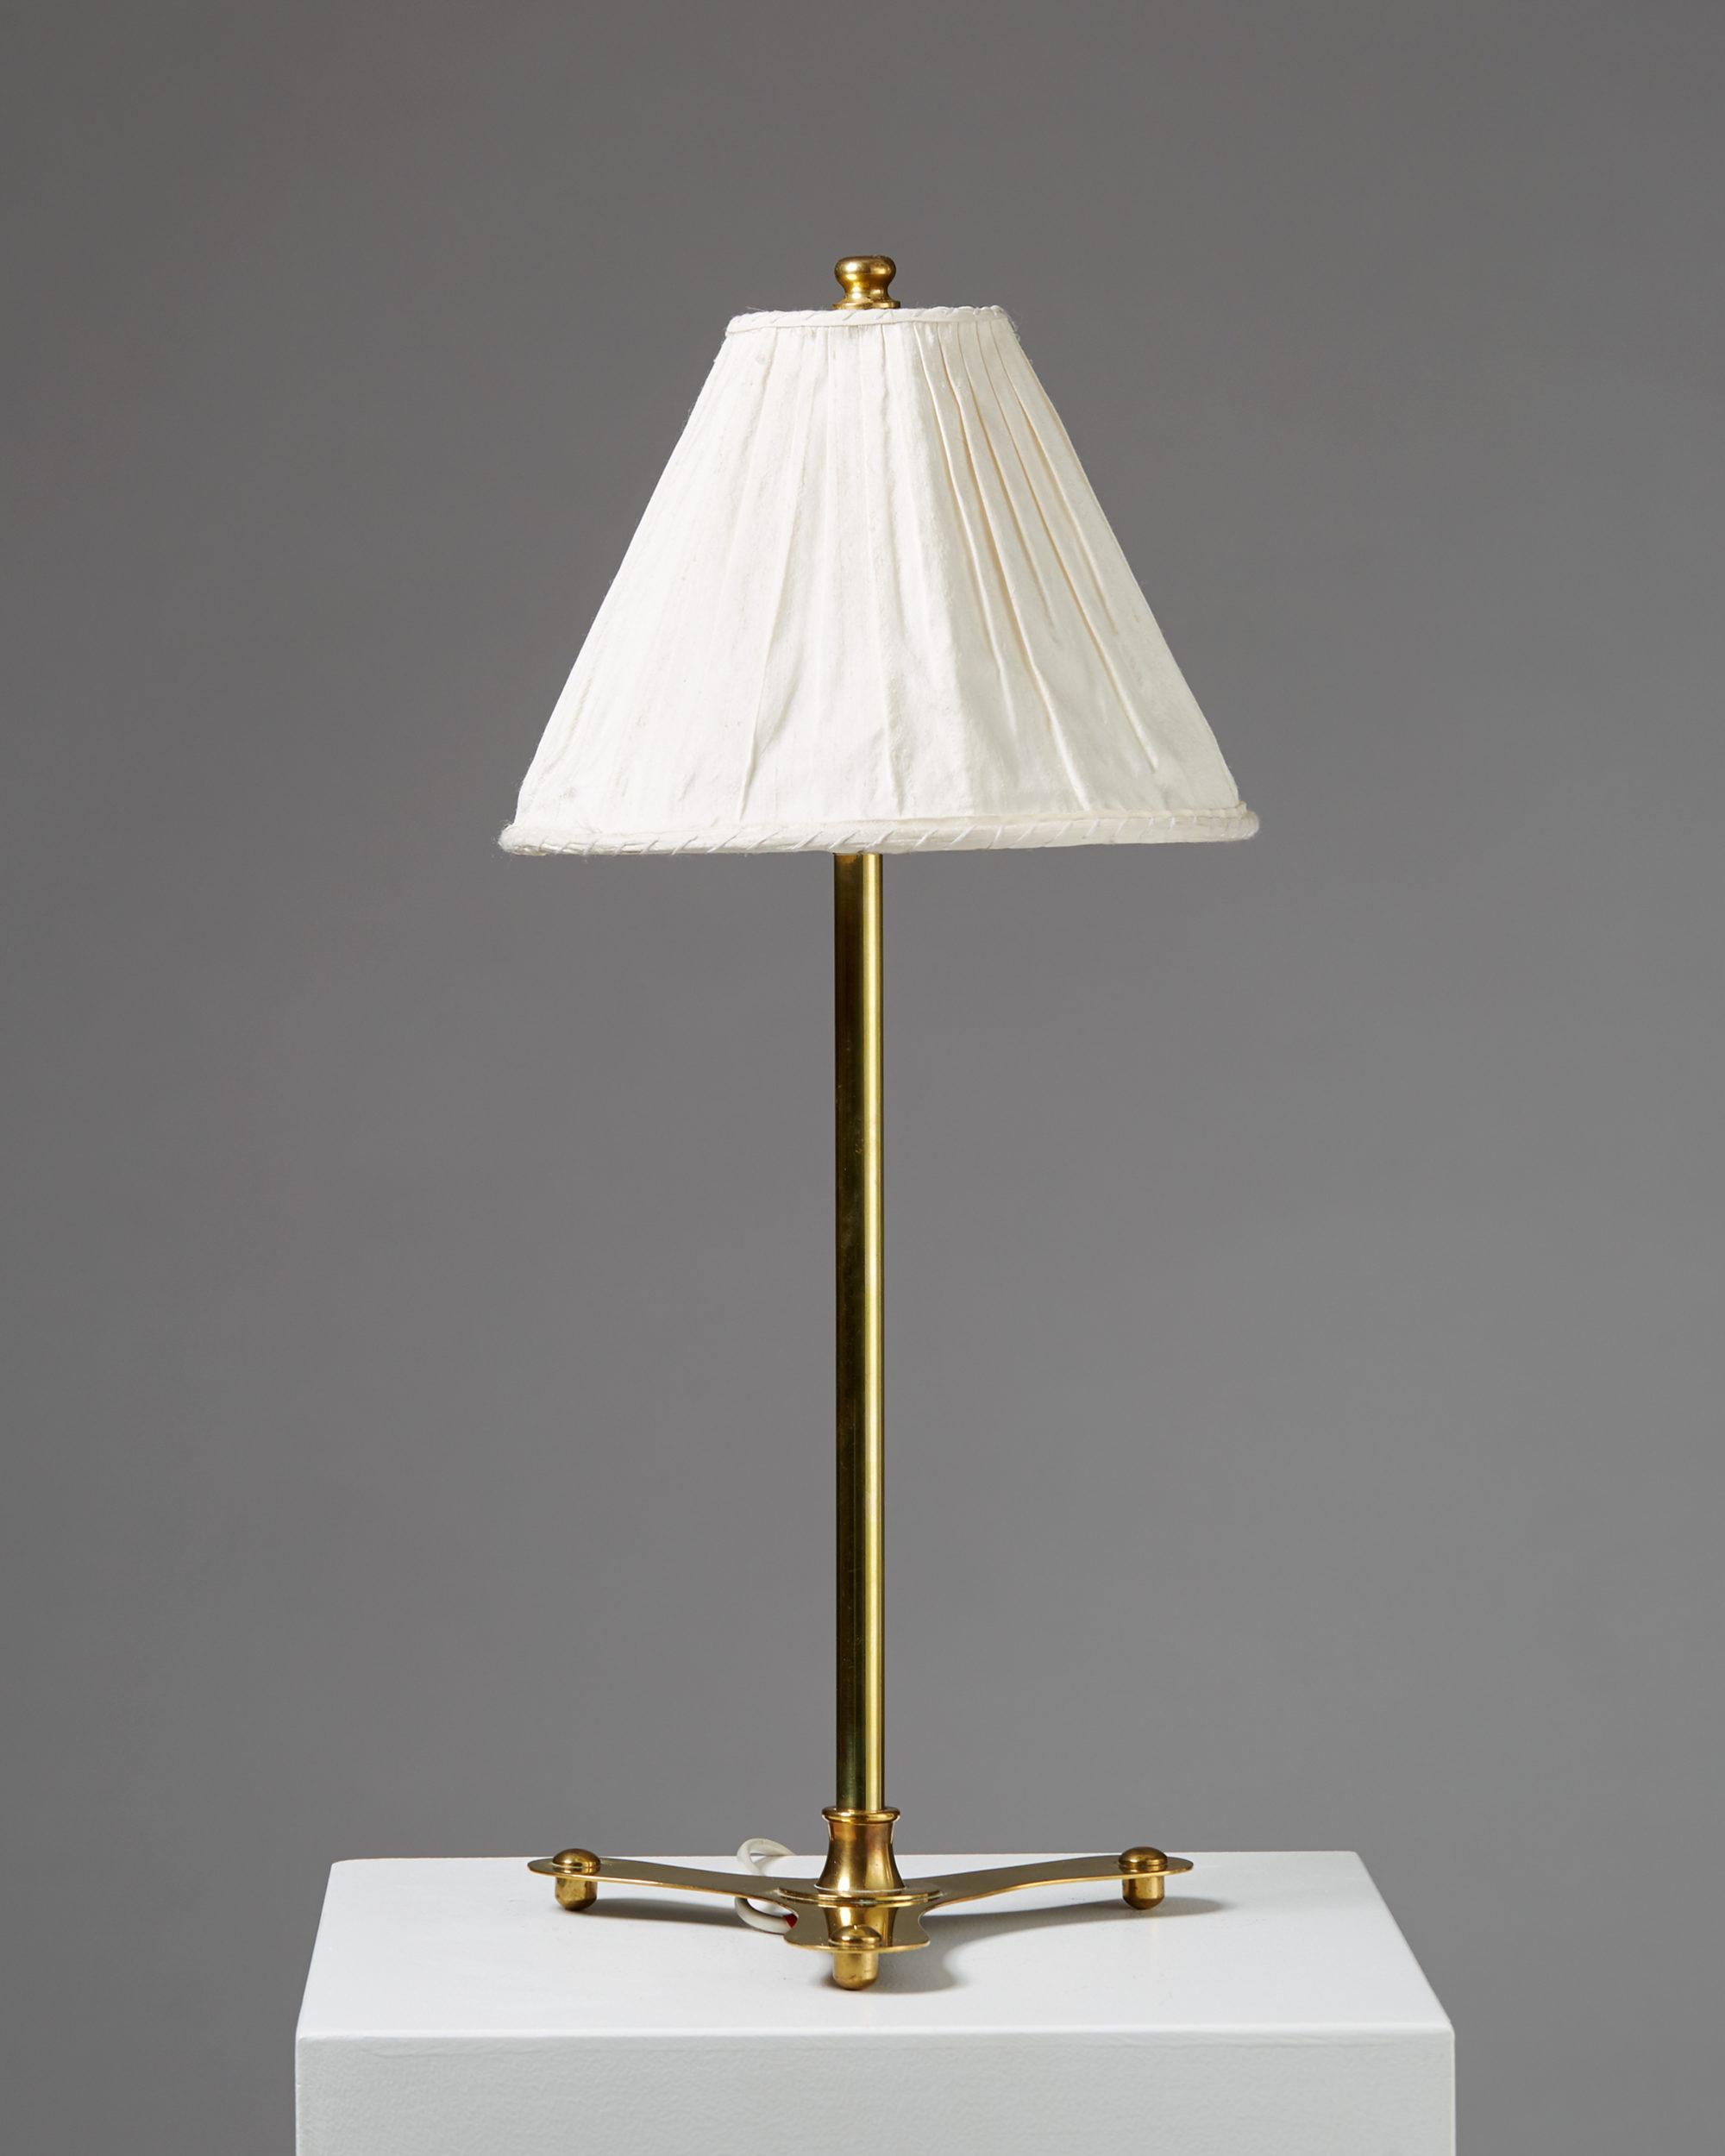 En laiton. Lampe de table Modèle 2552 Designed by Josef Frank for Svenskt Tenn, Sweden, 1950s

Mesures : H 49,5 cm/ 1' 8